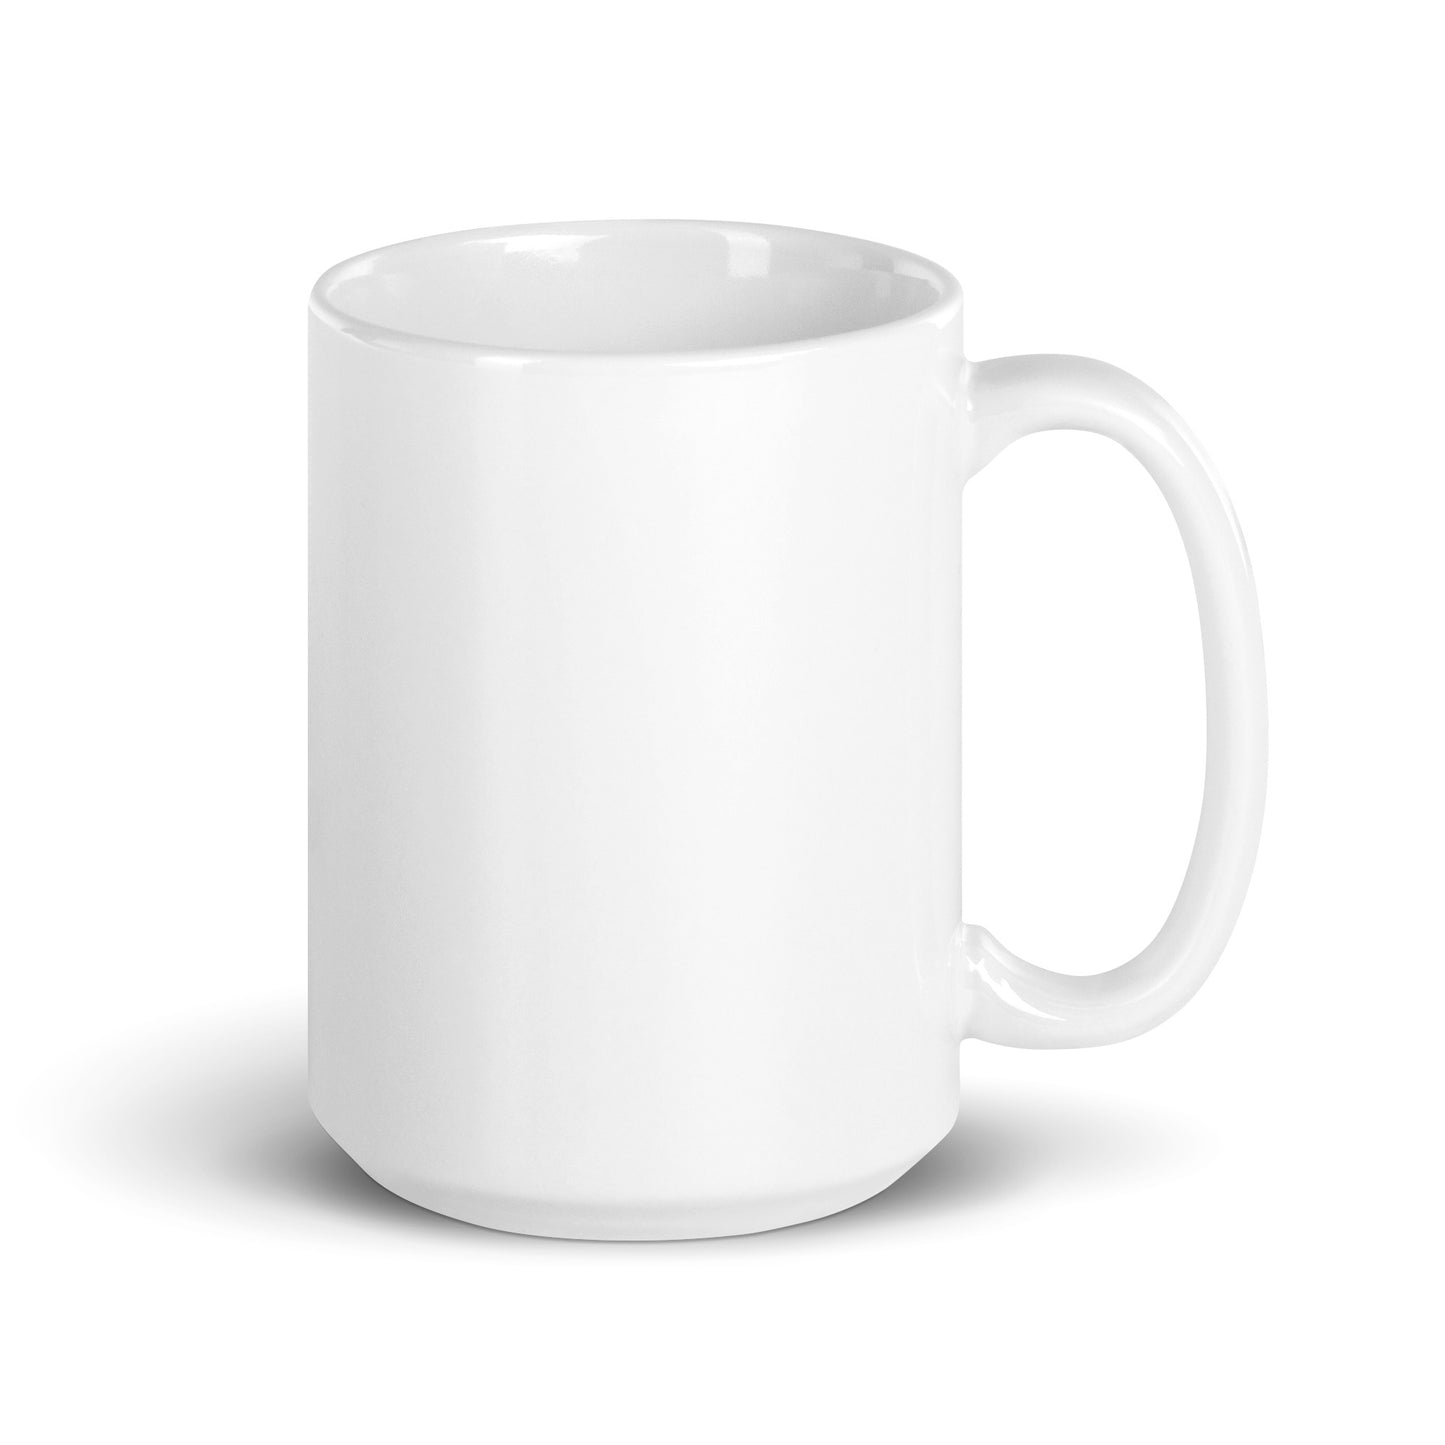 Steve Kirsch Quote - White glossy mug